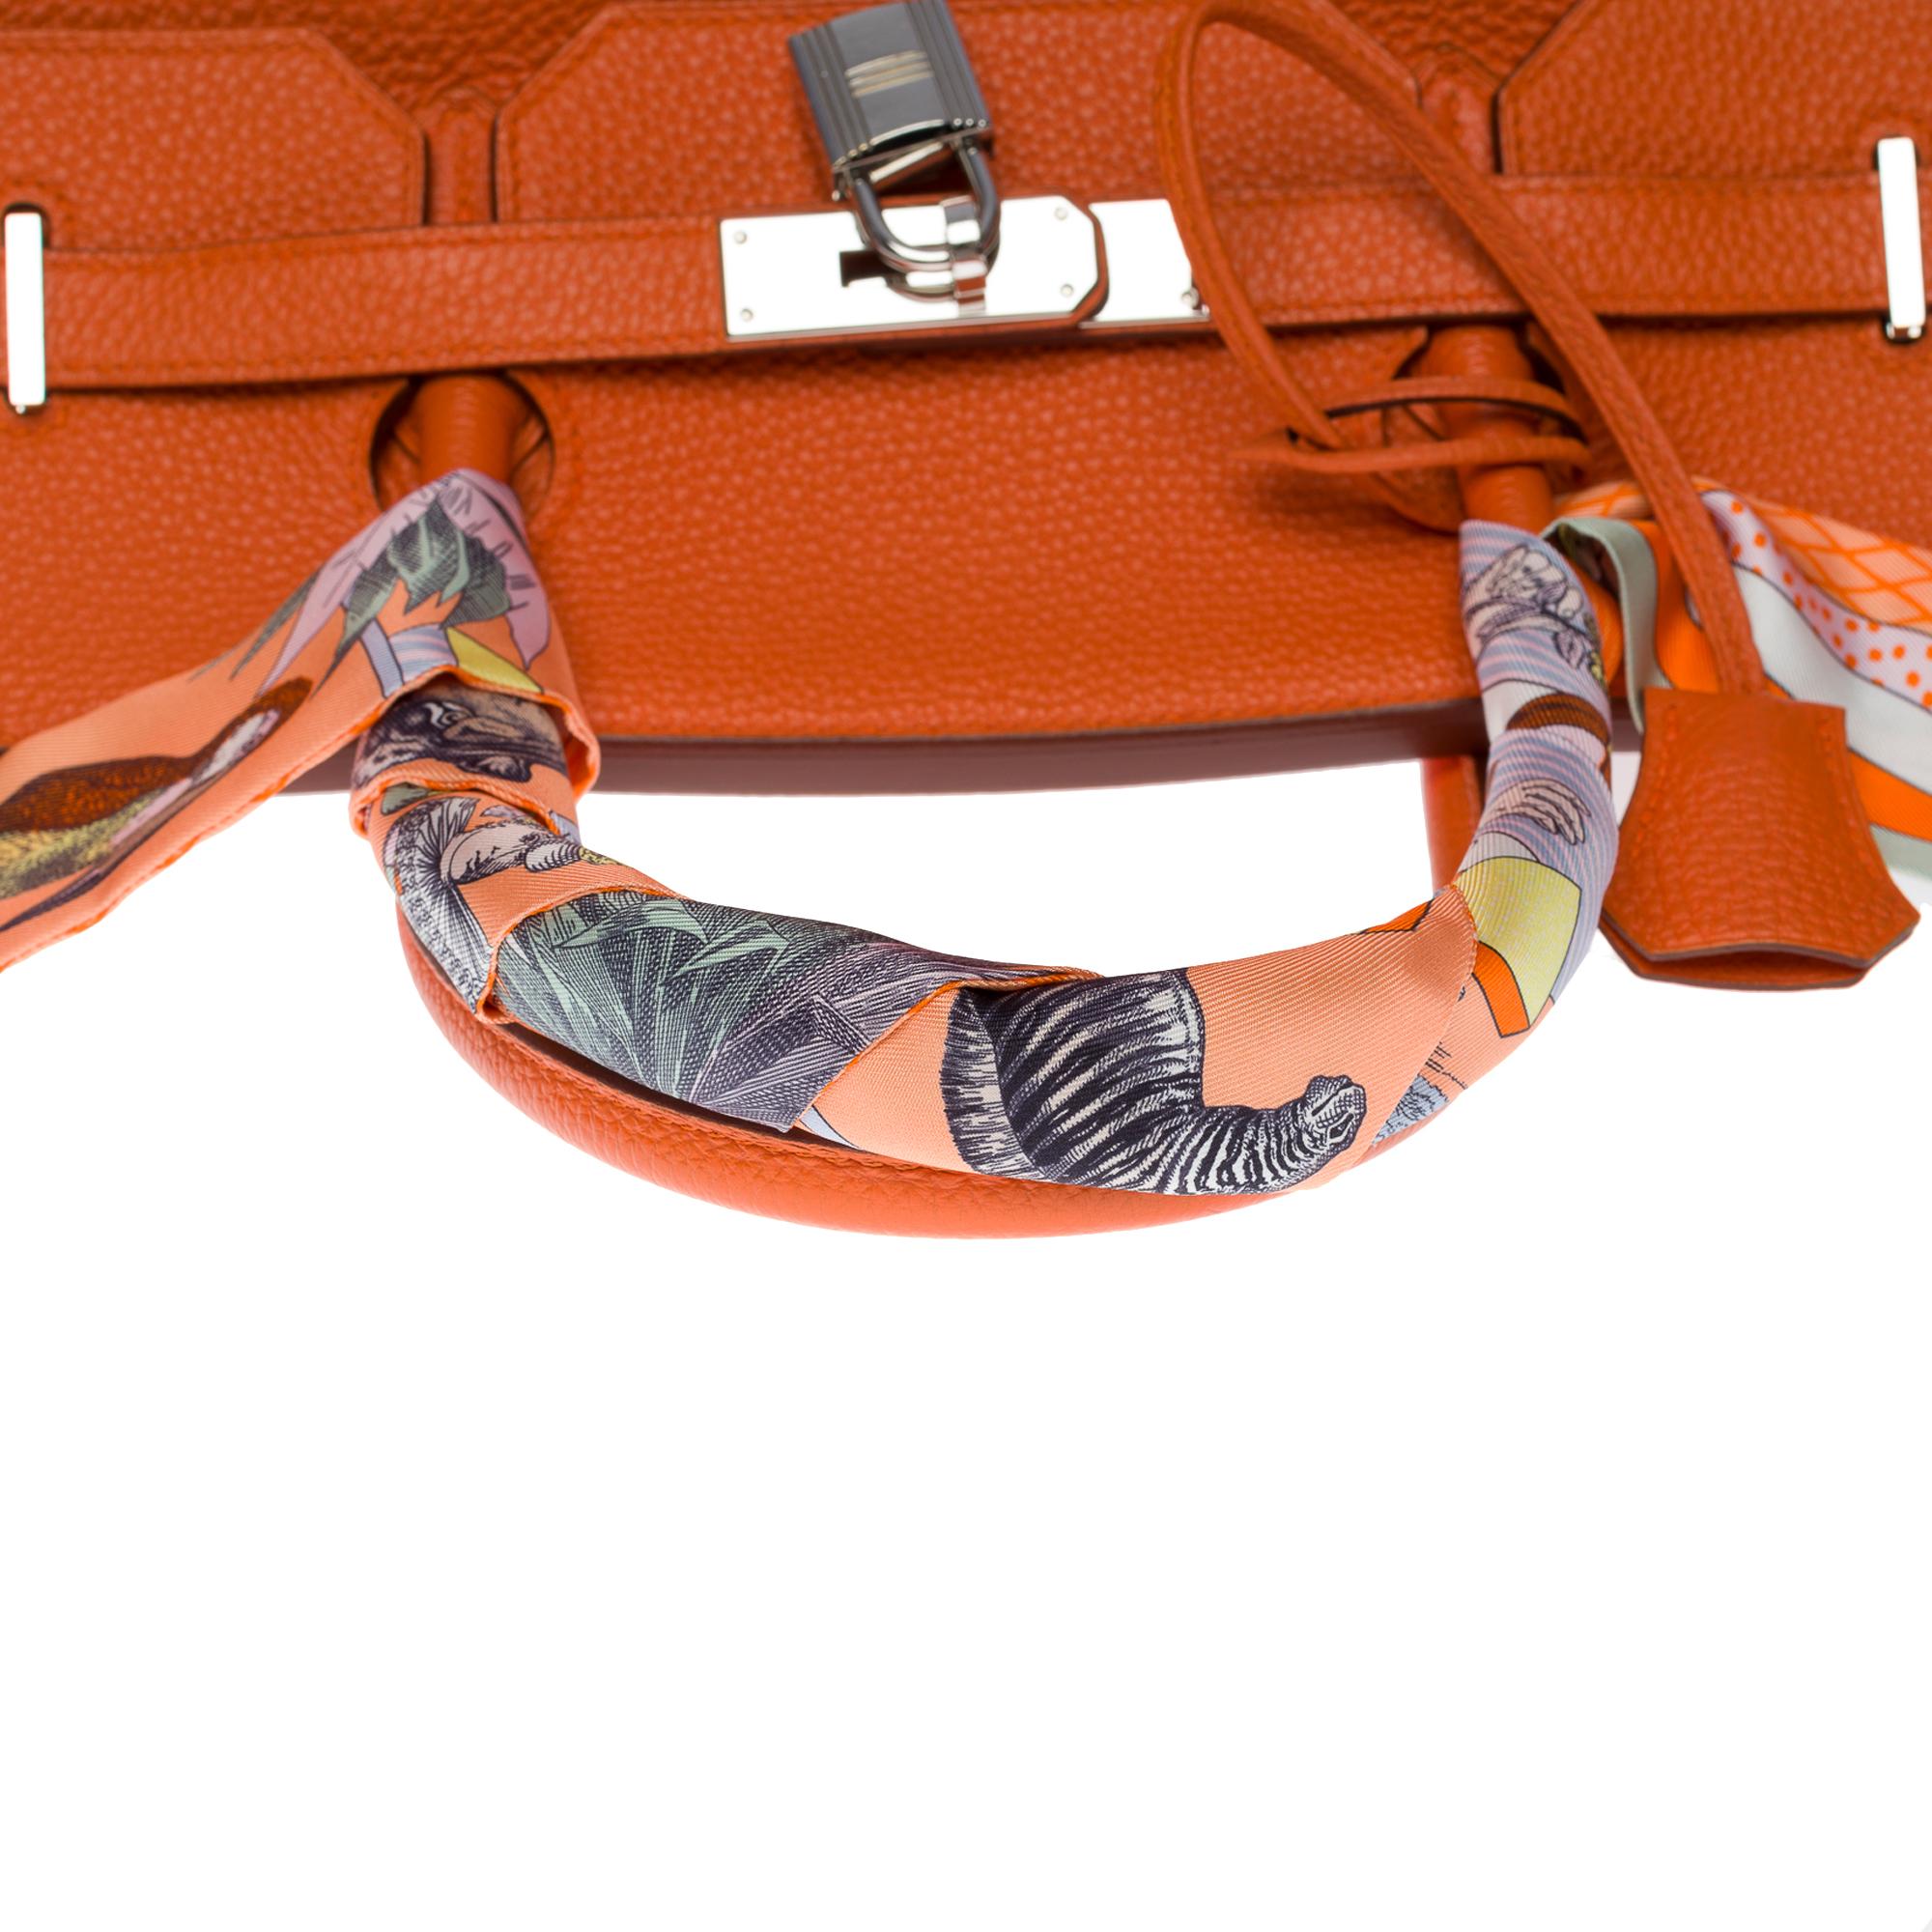 Stunning Hermes Birkin 40cm handbag in Orange Terre battue Togo leather, SHW 5